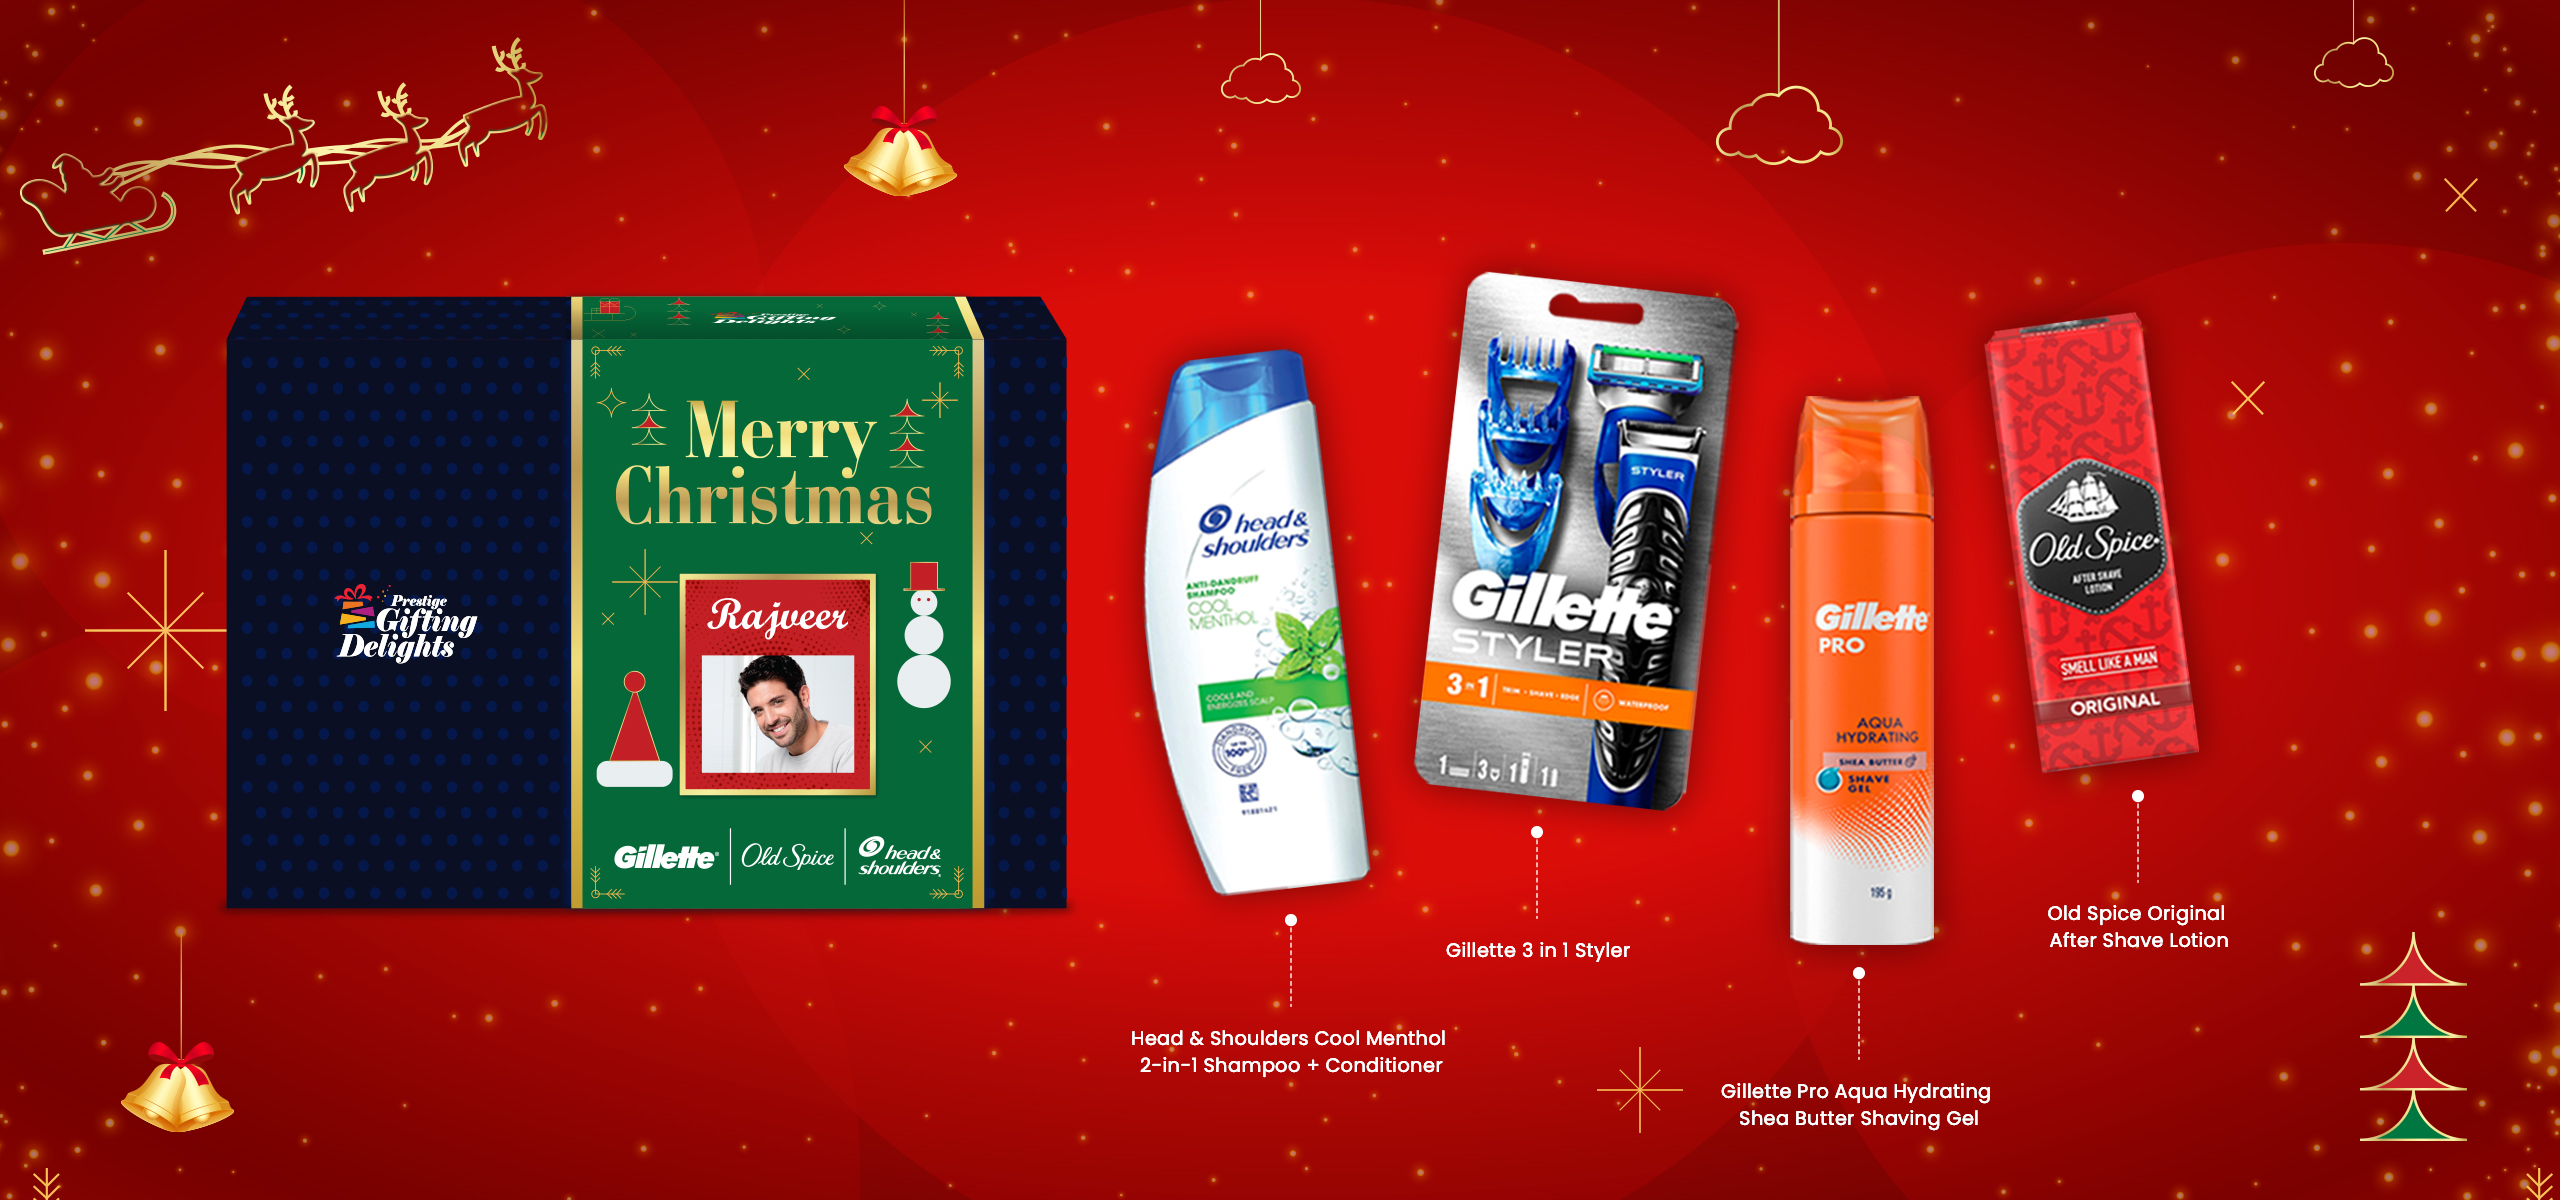 Men's Grooming Essentials Christmas Gift Pack